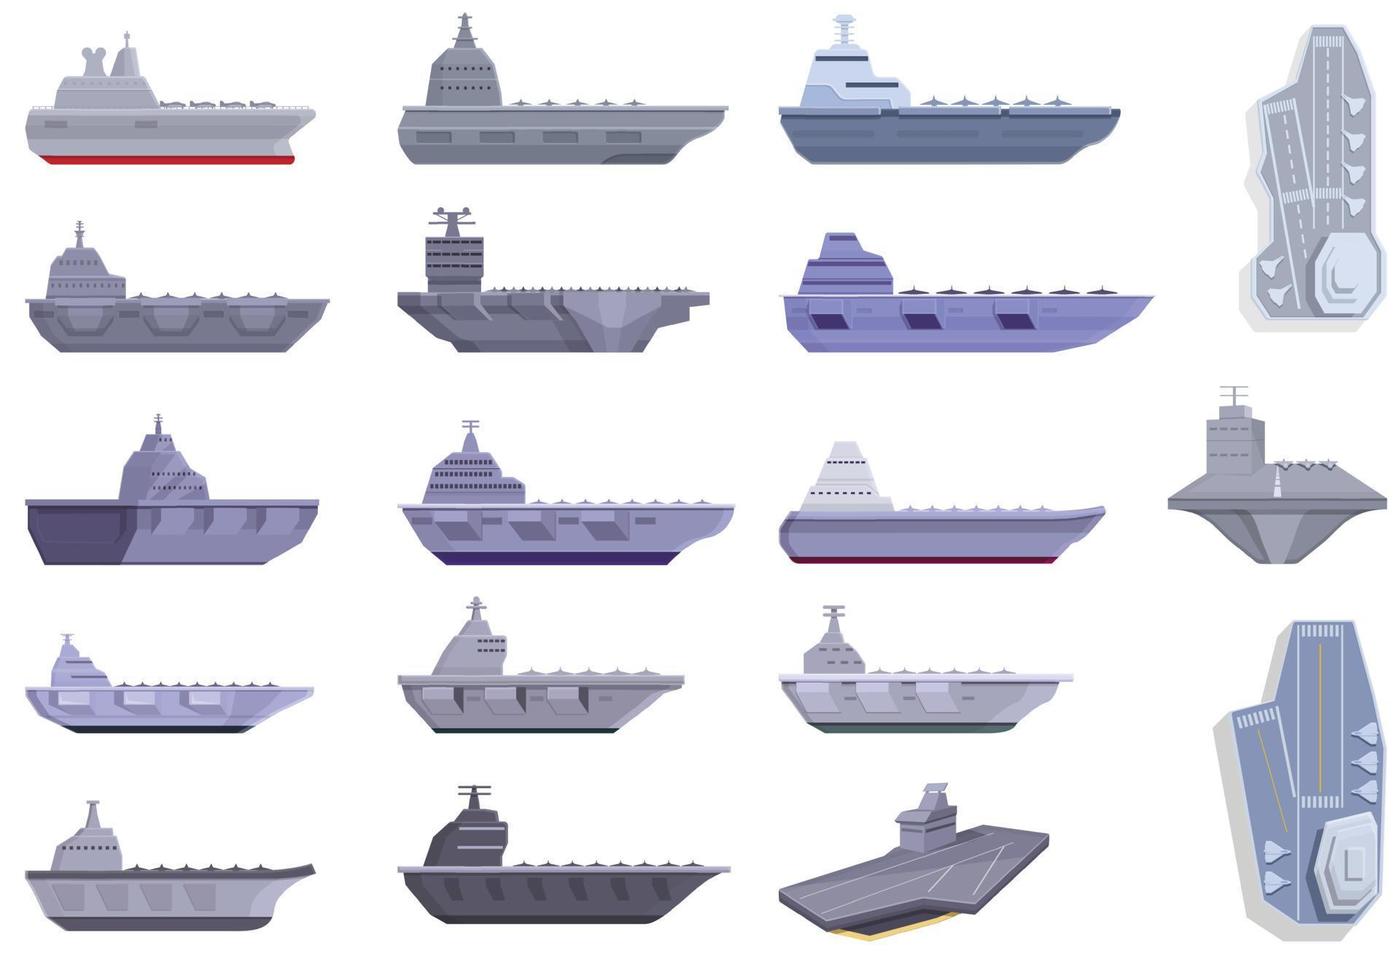 Aircraft carrier icons set, cartoon style vector